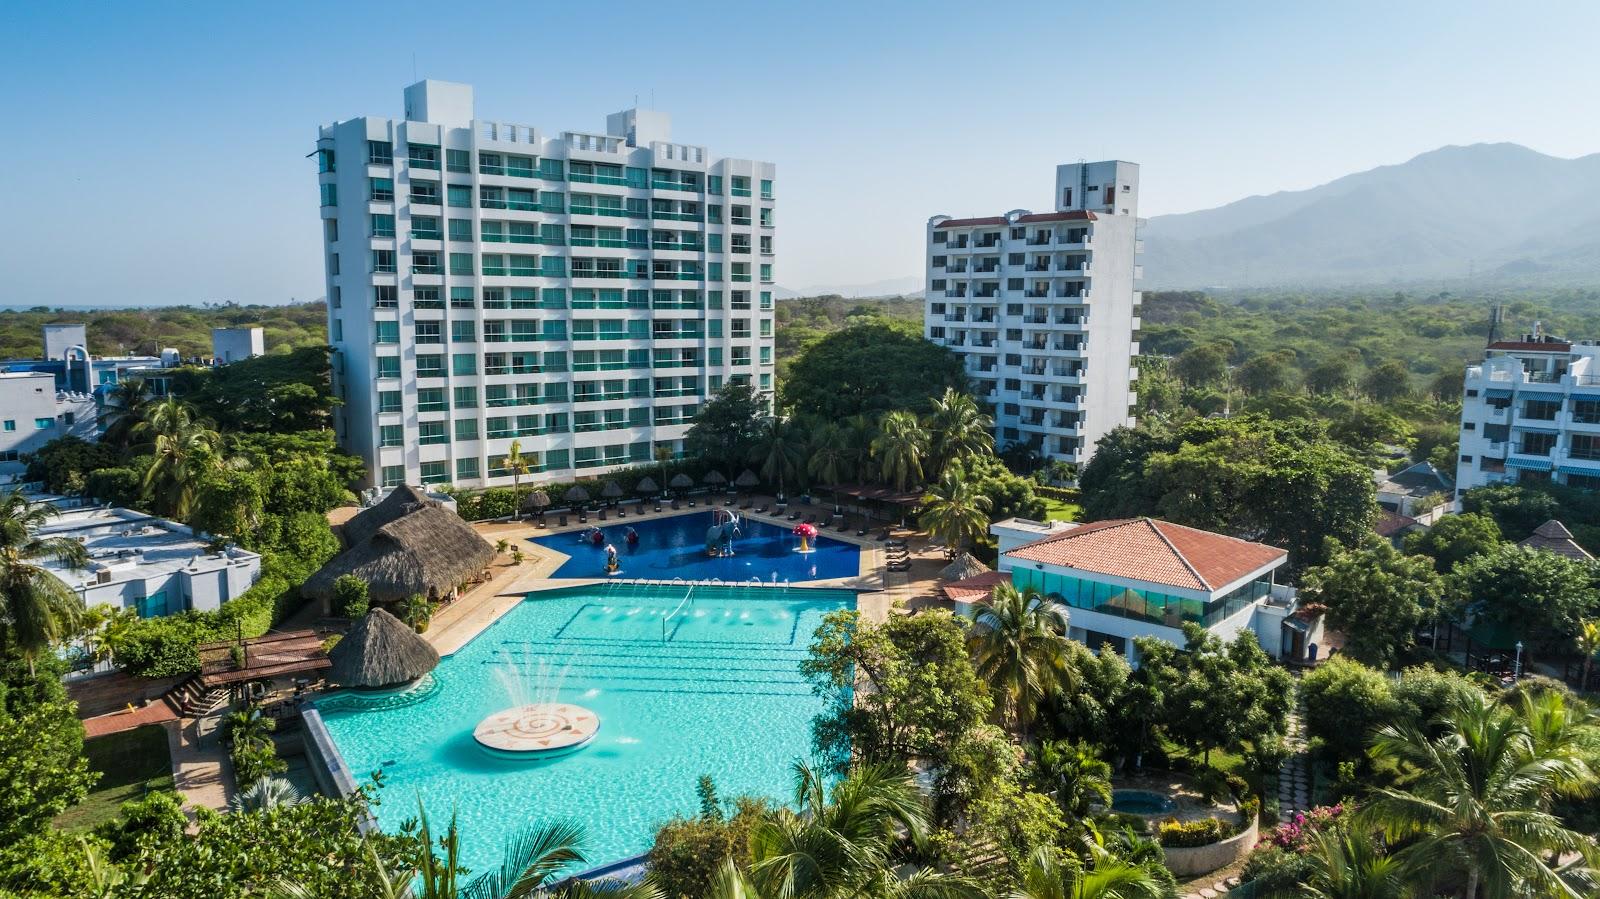 Sandee - Ghl Relax Hotel Costa Azul Beach